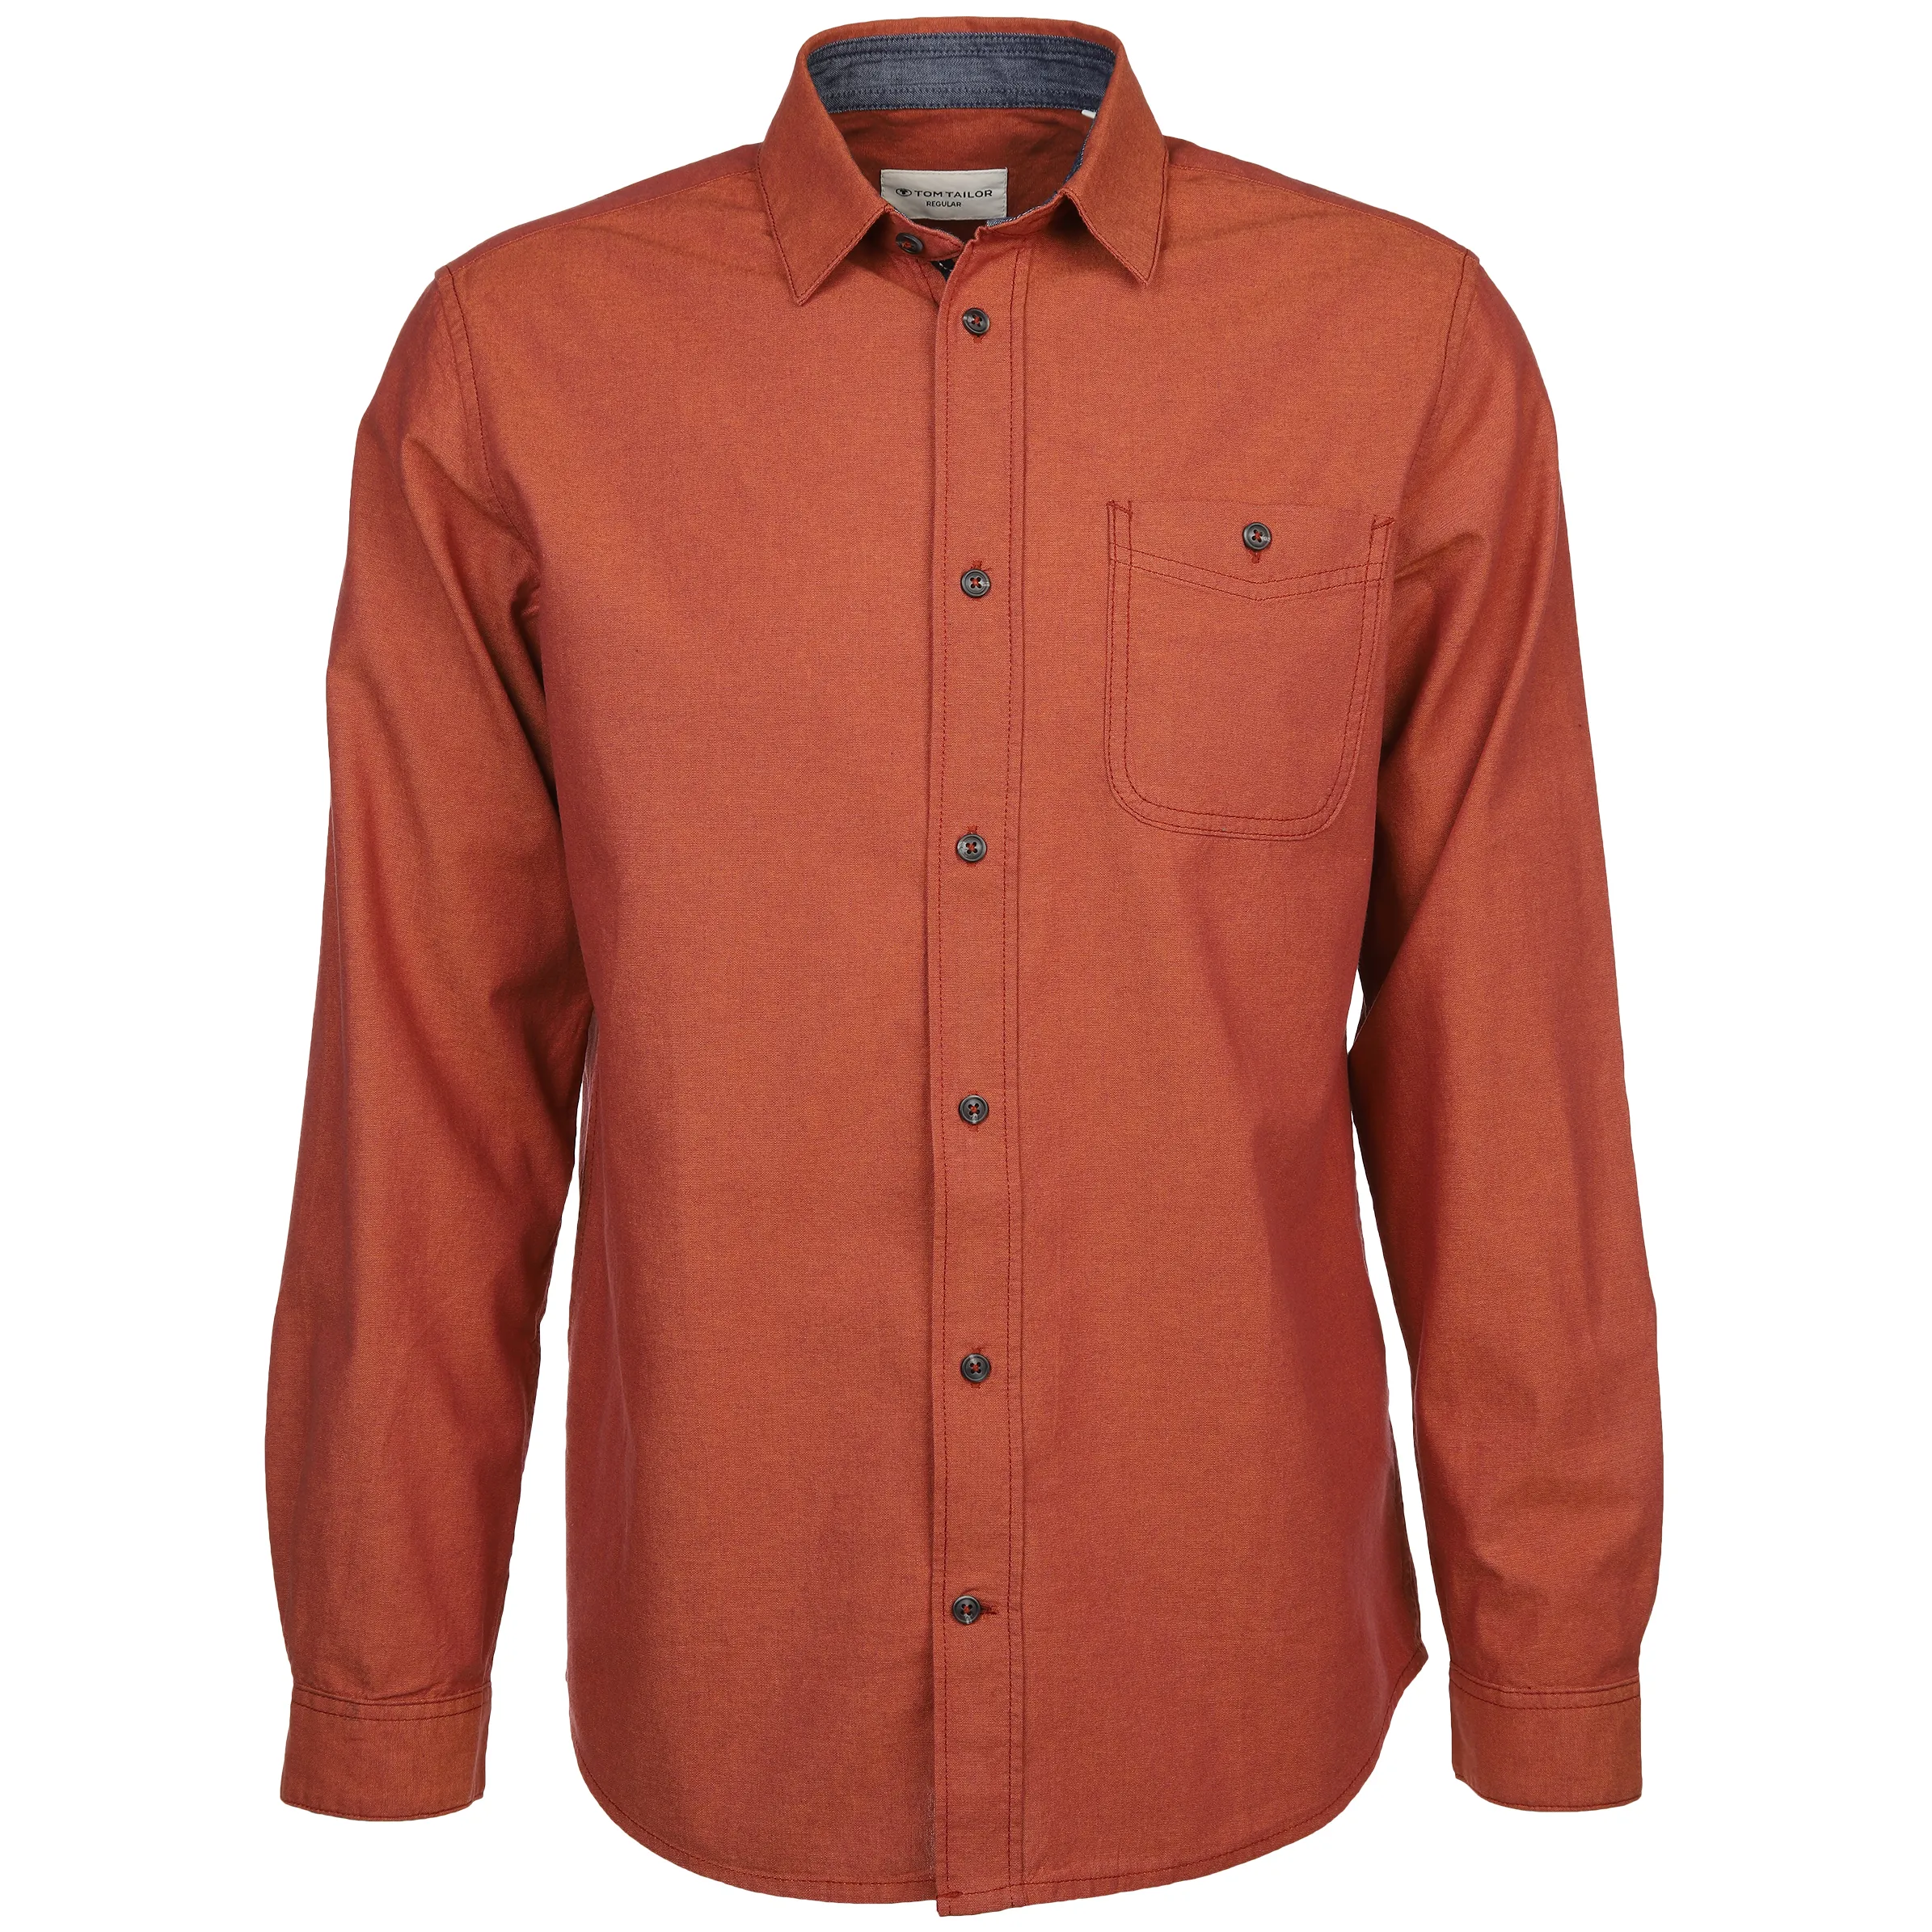 Tom Tailor 1037450 chambray shirt Orange 884279 32316 1